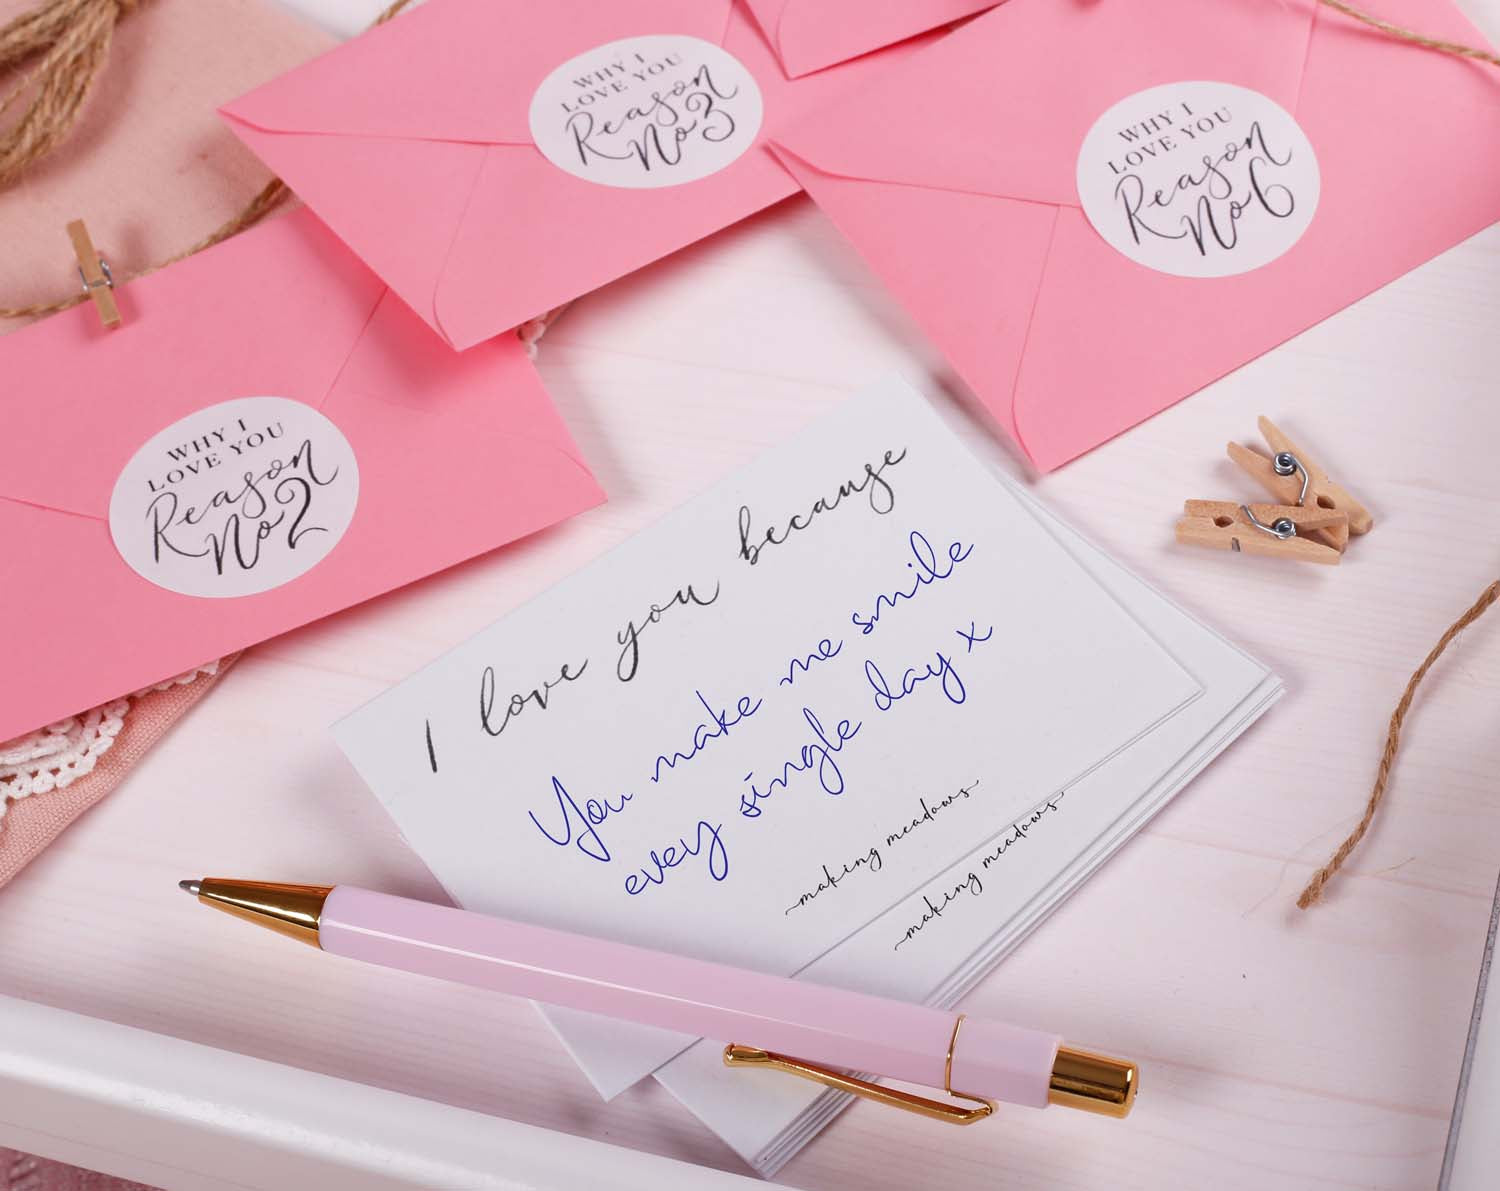 12 Reasons Why I Love You Mini Envelopes